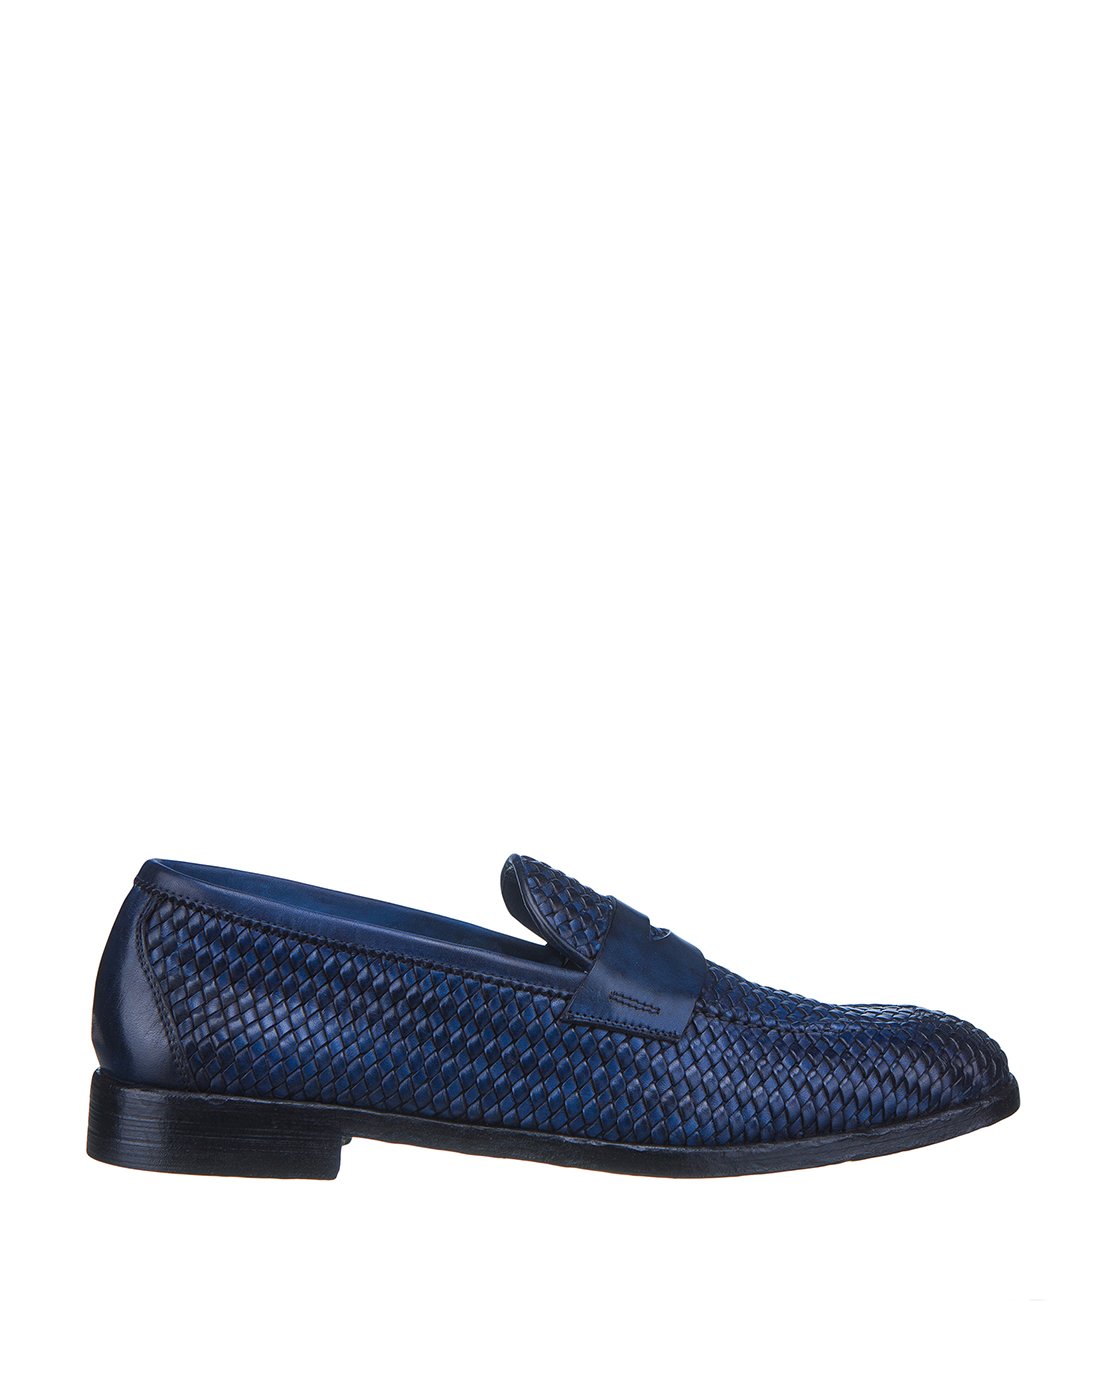 Туфли синие мужские Brecos S9507 BLUE-1